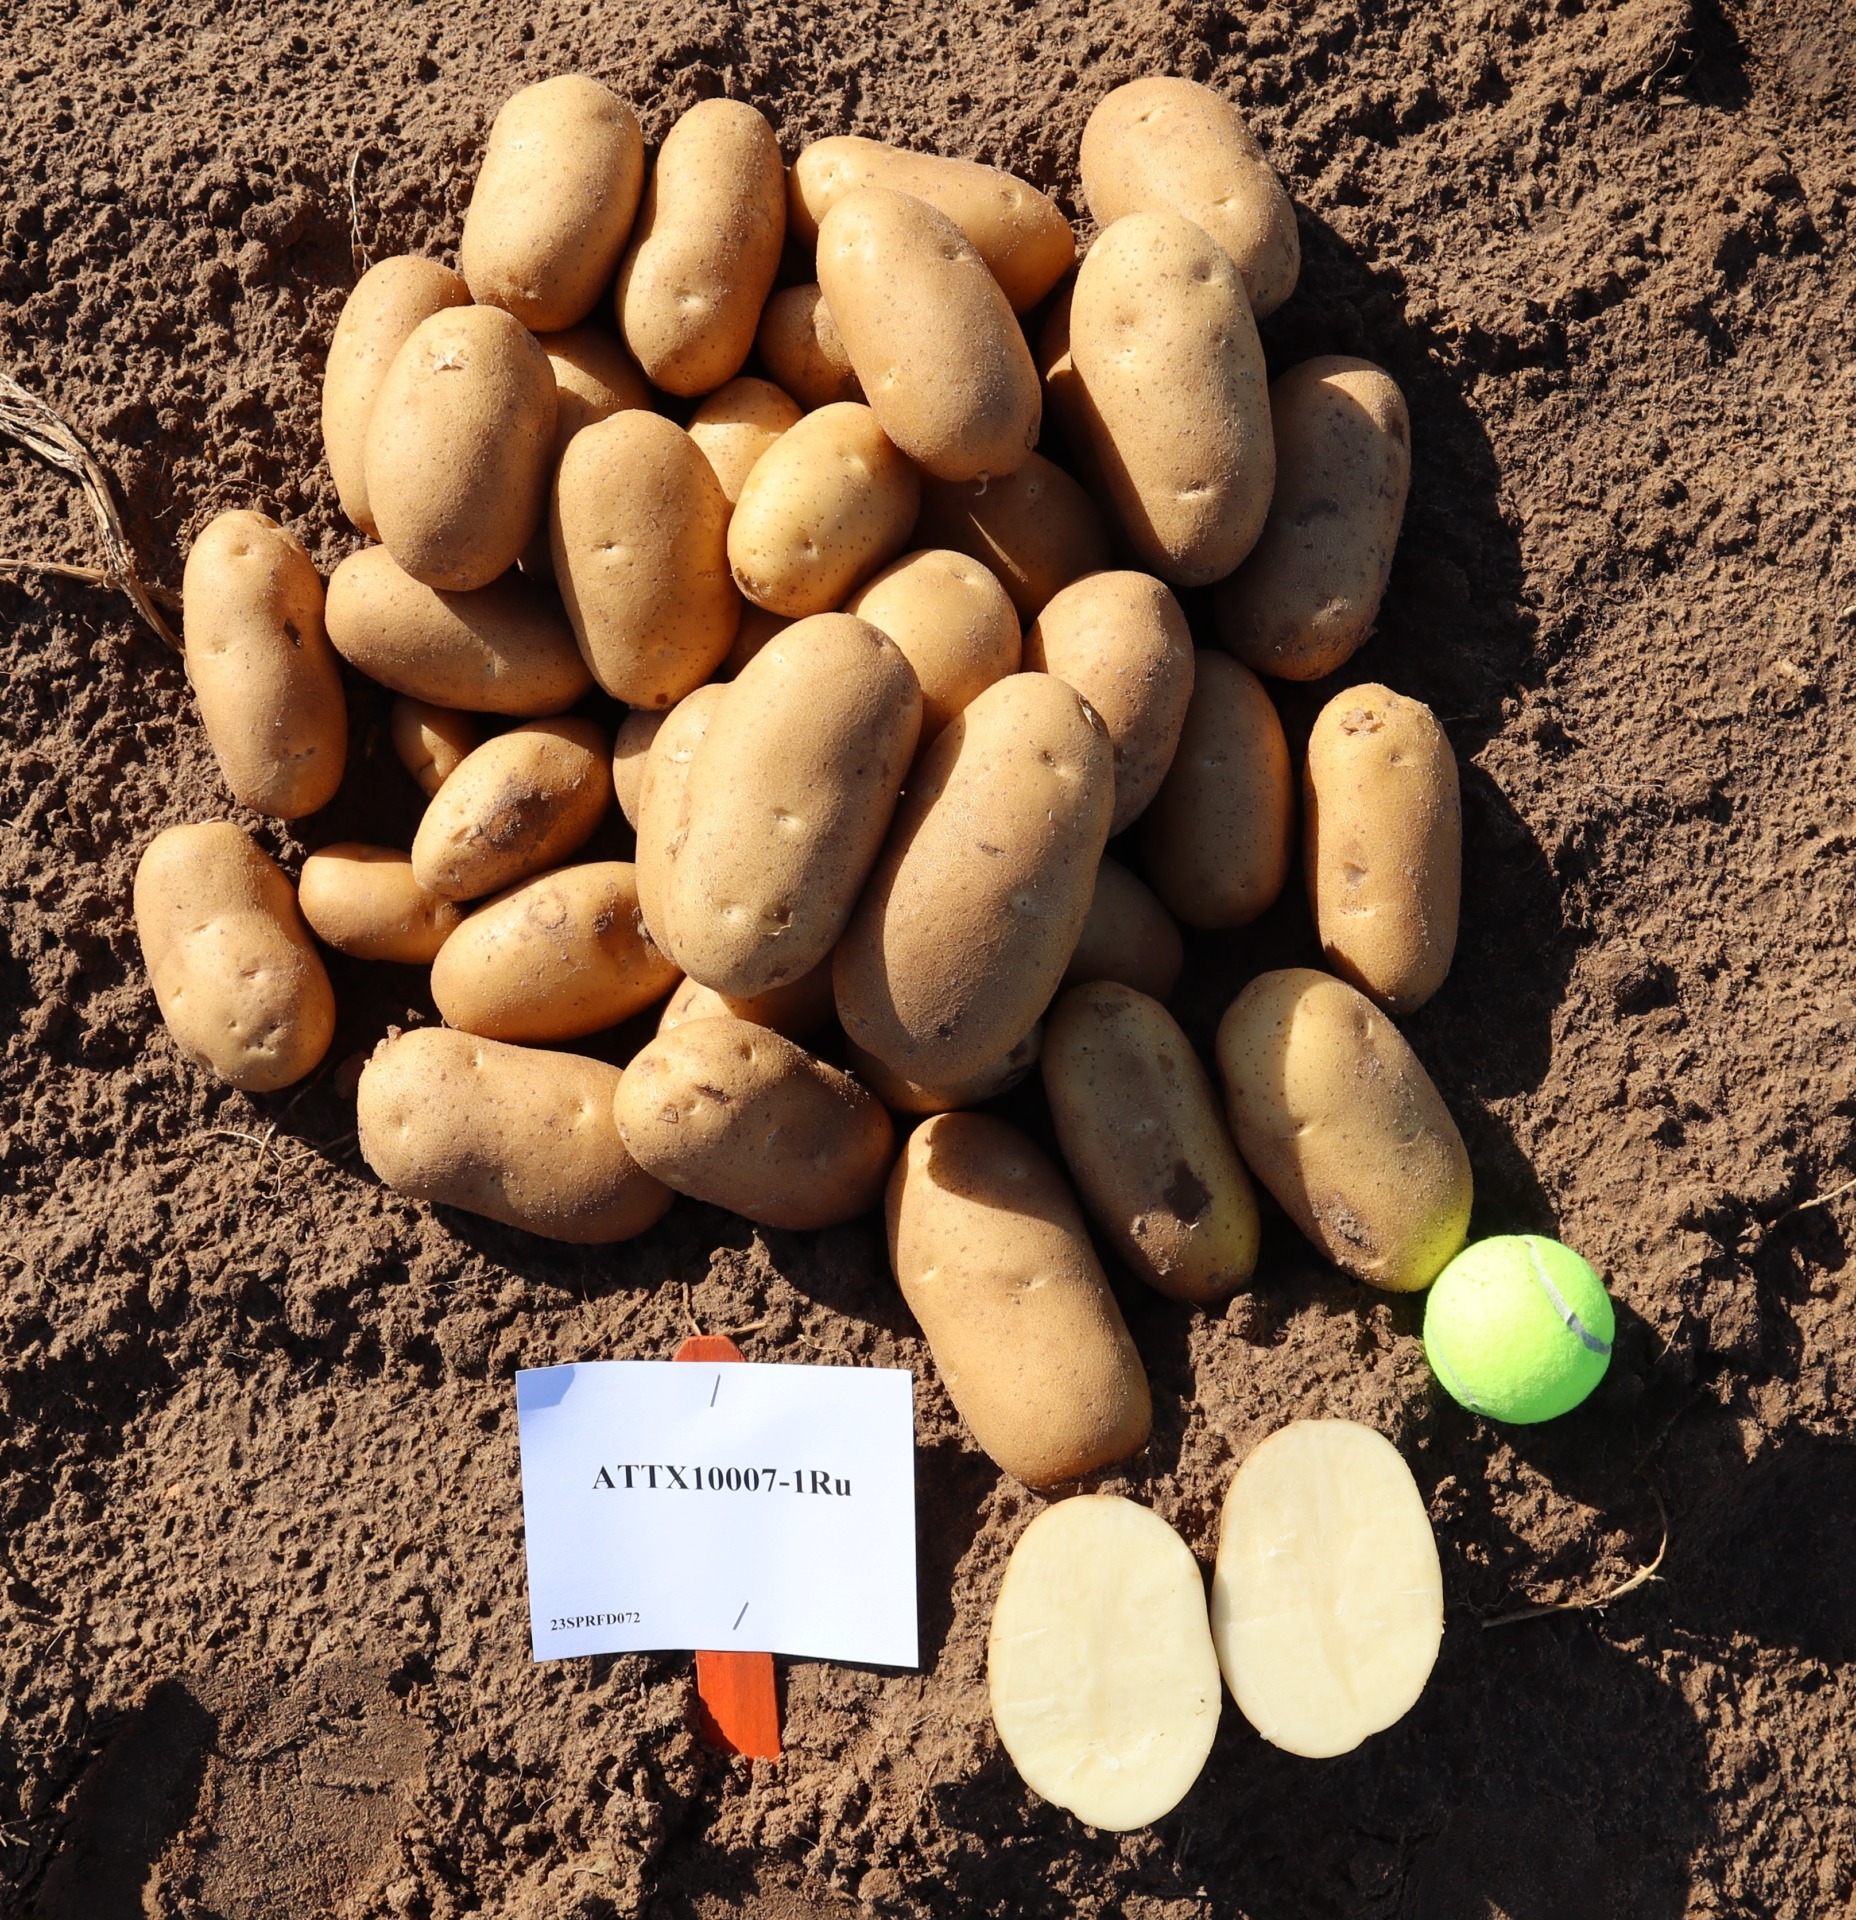 Texas A&M Potato Breeding Program highlights market, varietal expansions